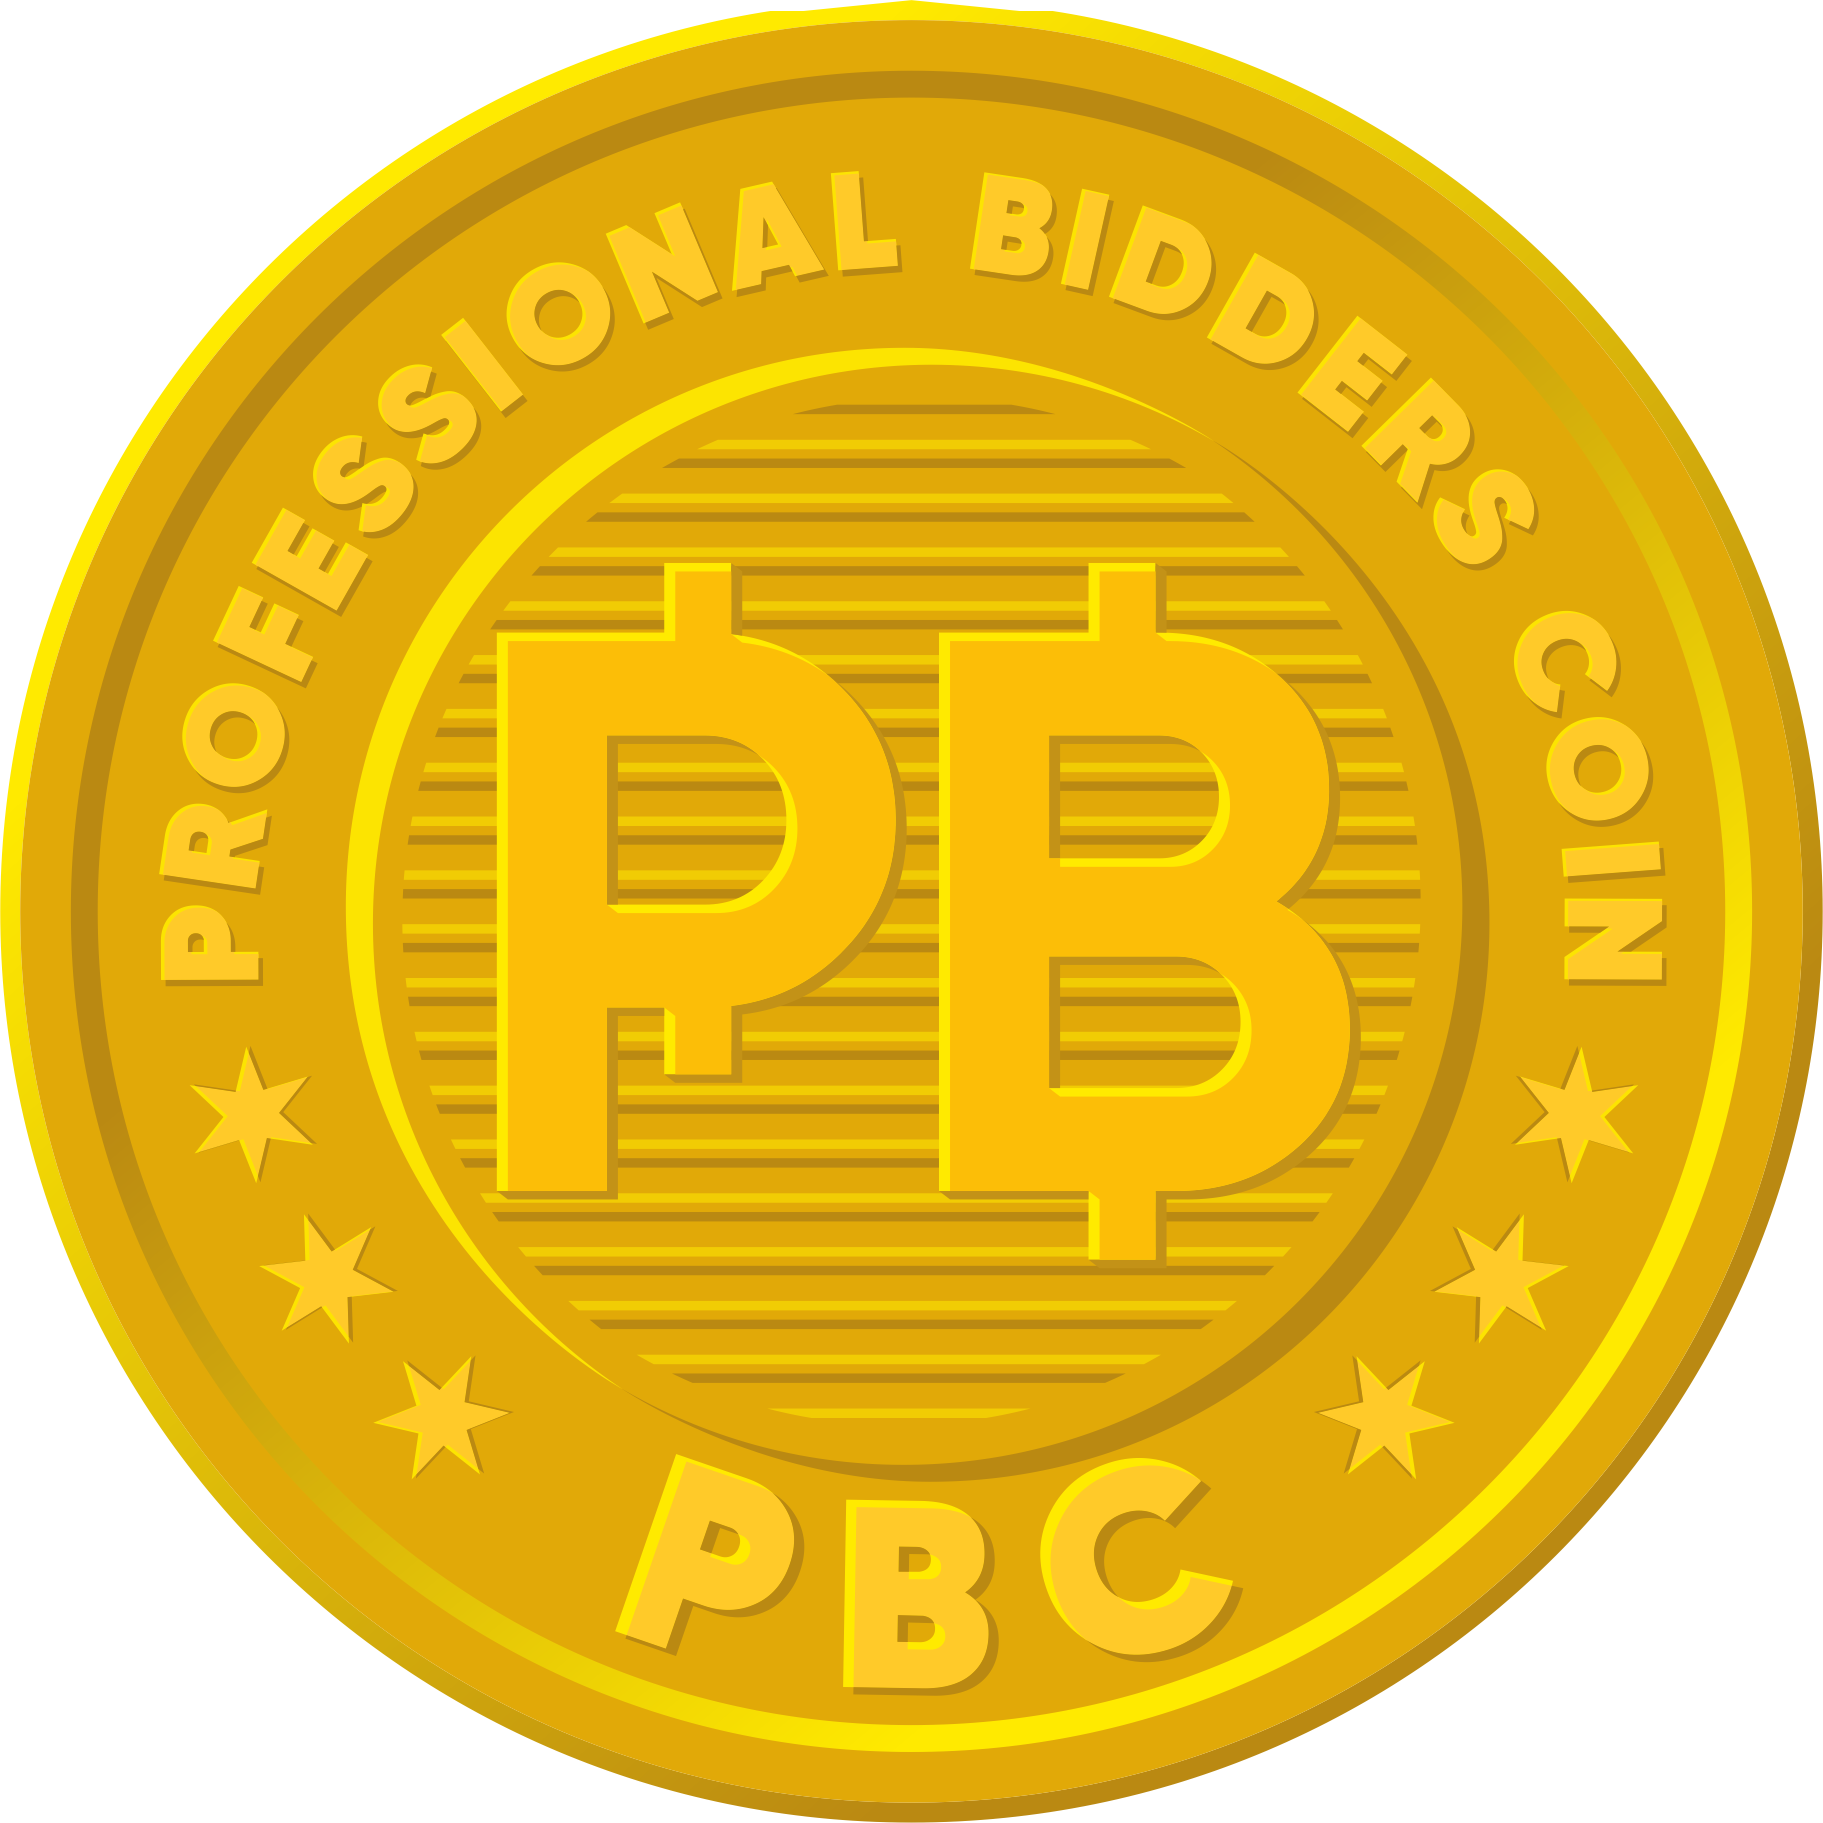 Professional Bidders Coin